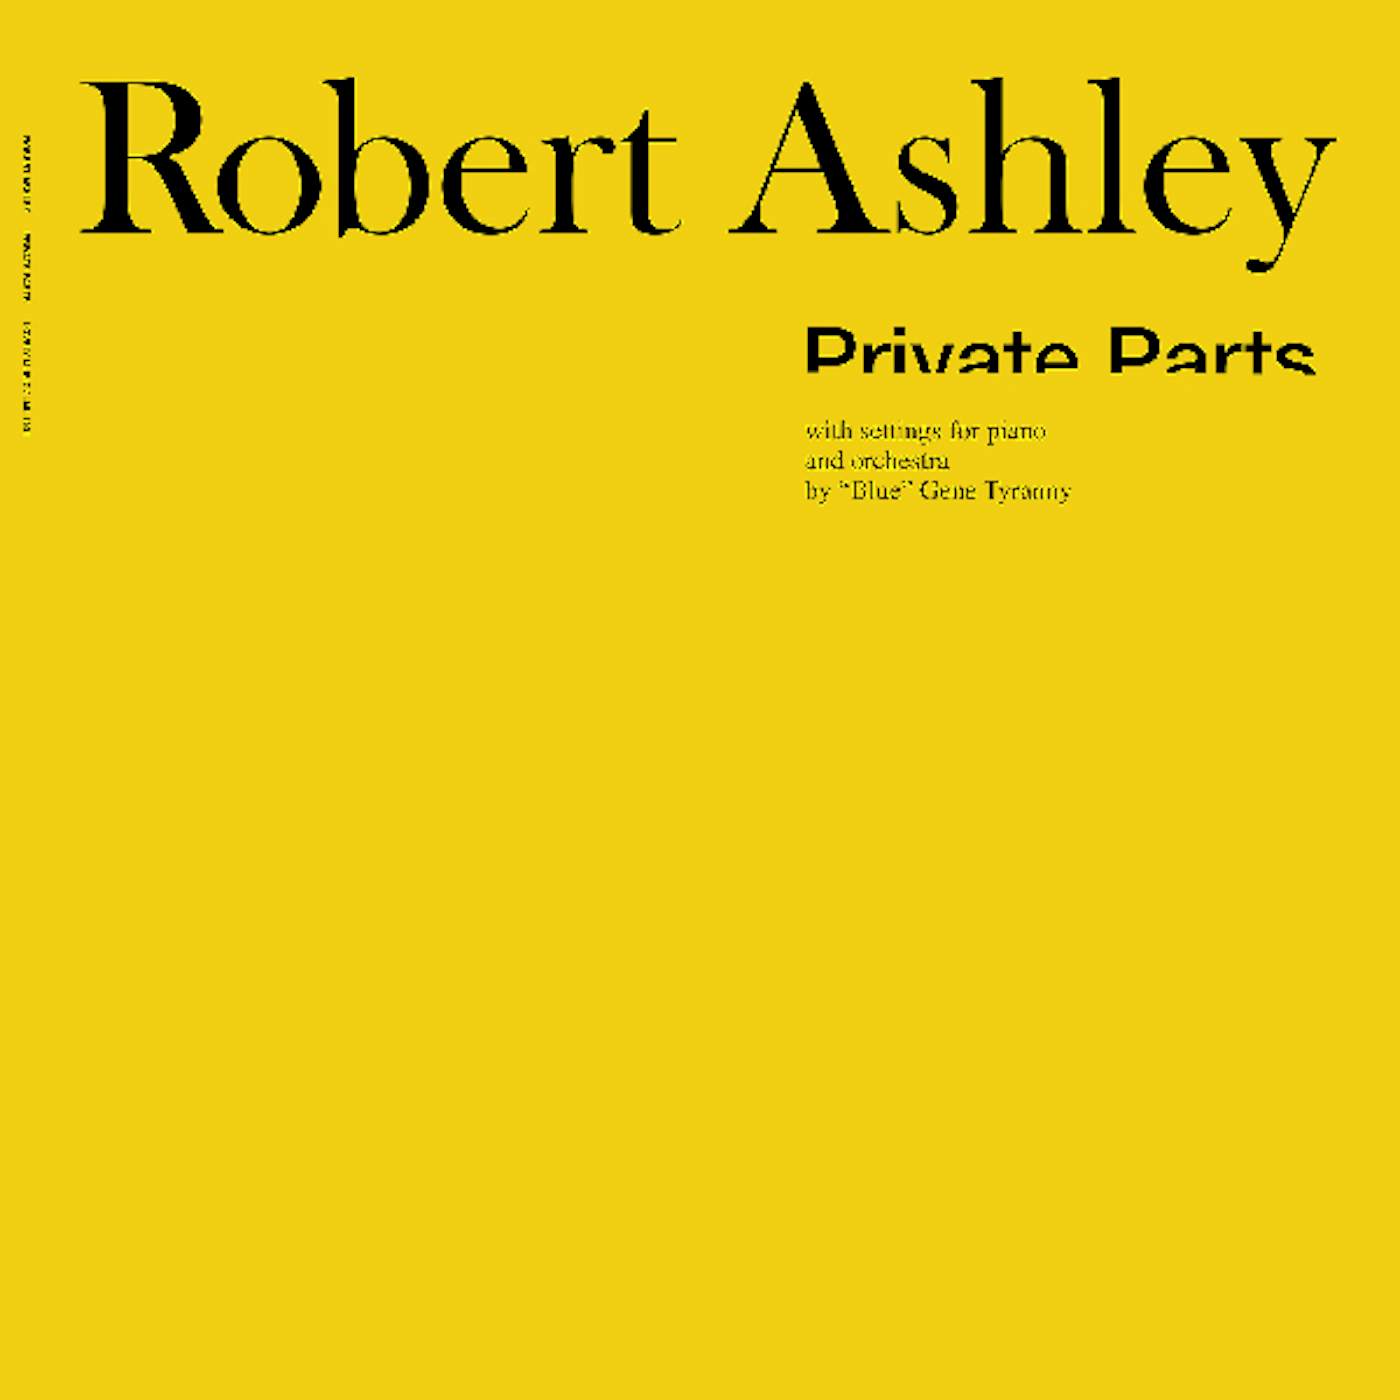 Robert Ashley Private Parts Vinyl Record